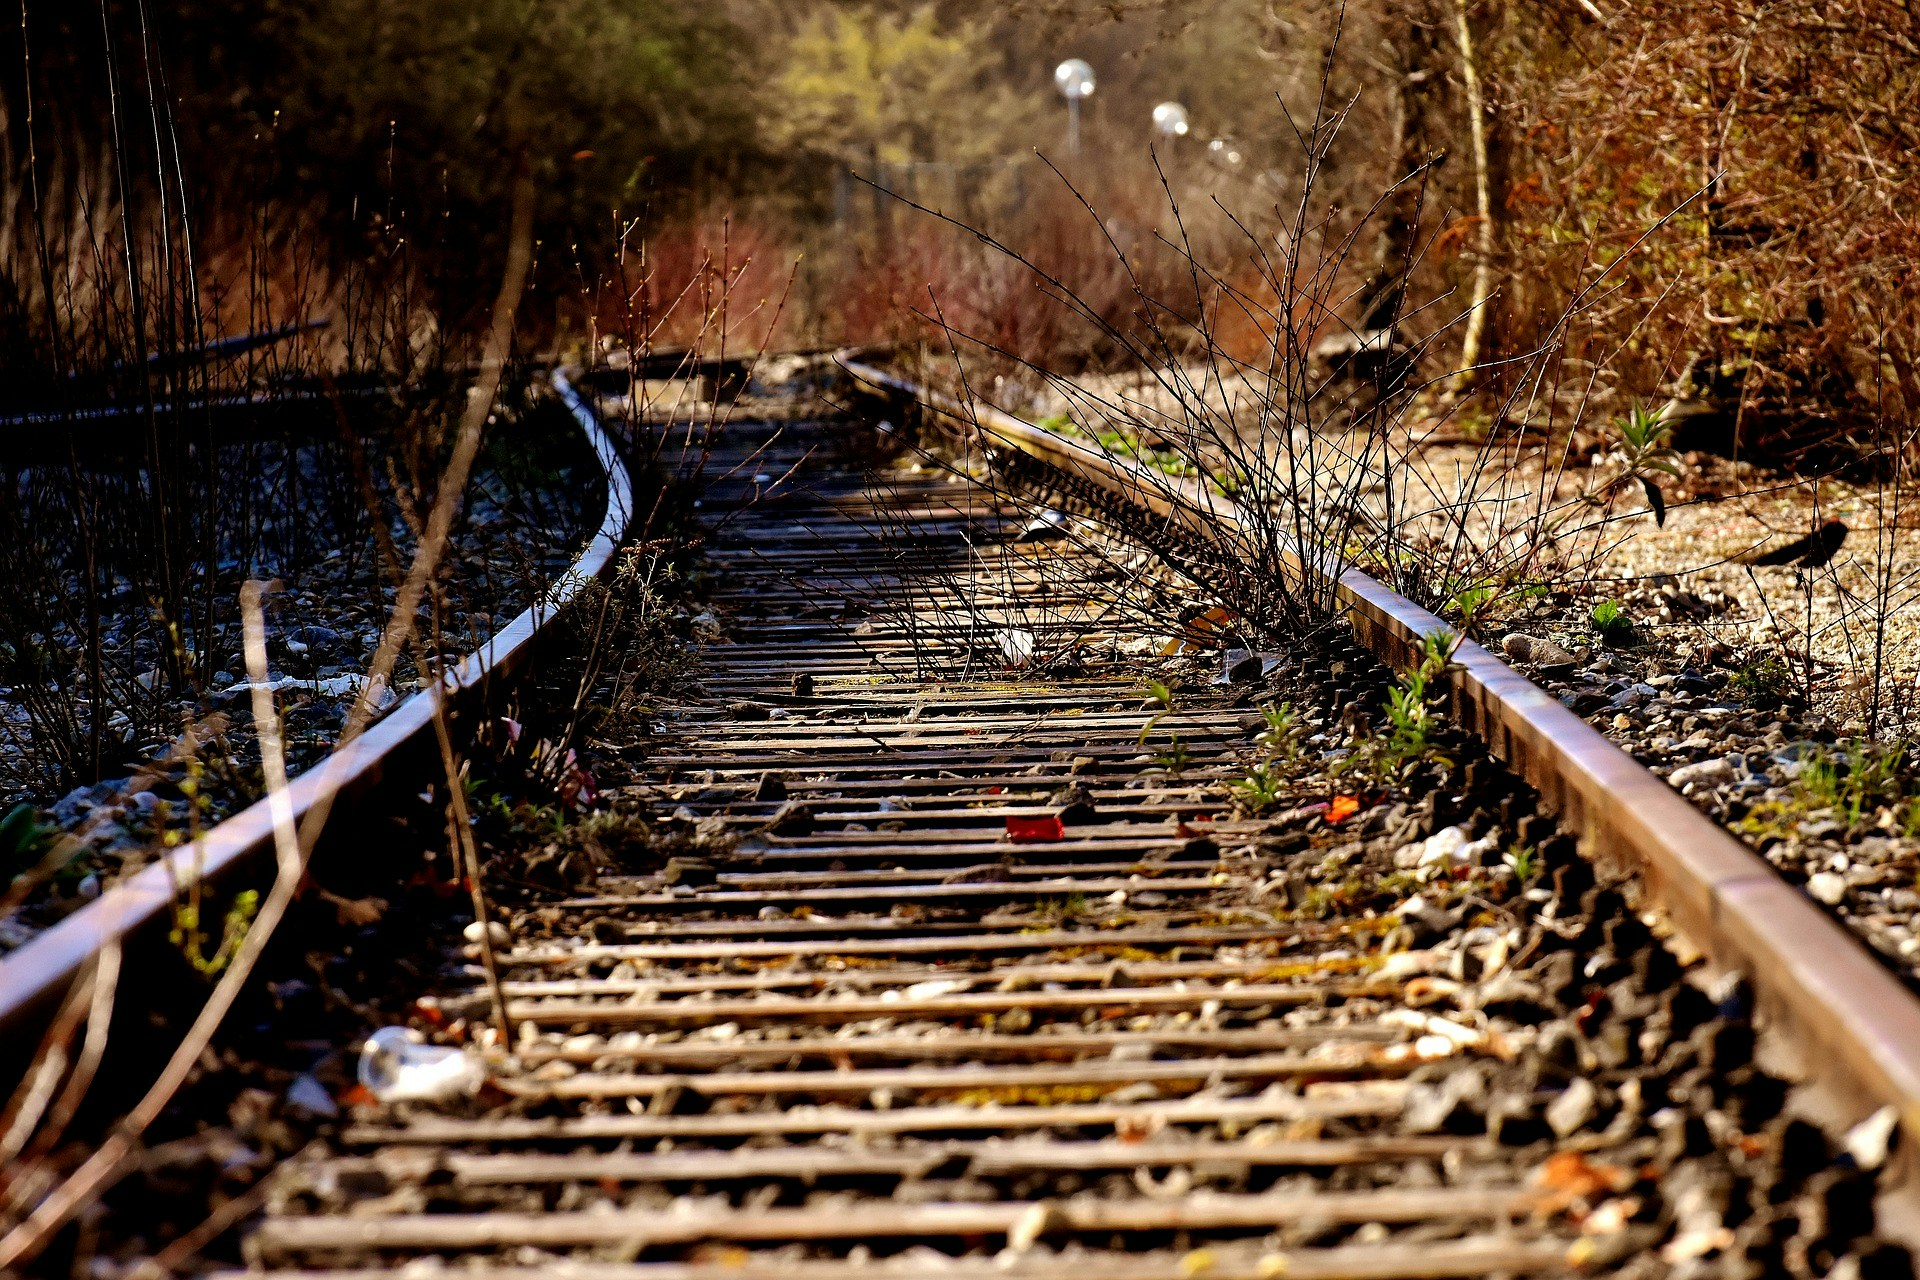 Old tracks